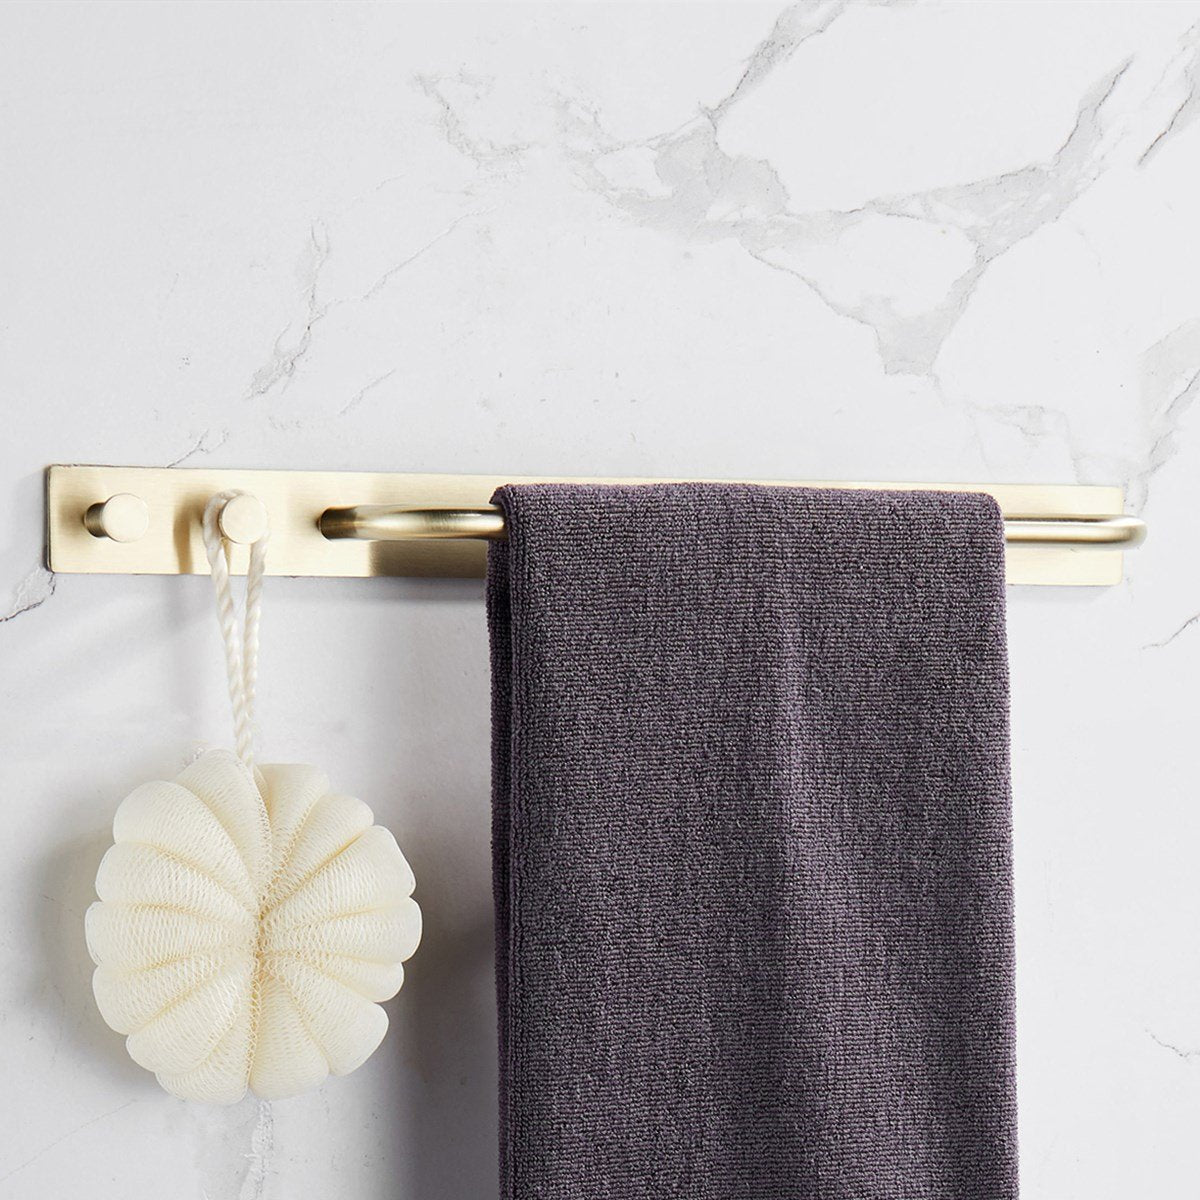 Towel Bar Holder, Bathroom Rack with 2 Strong Viscosity Hooks Accessories